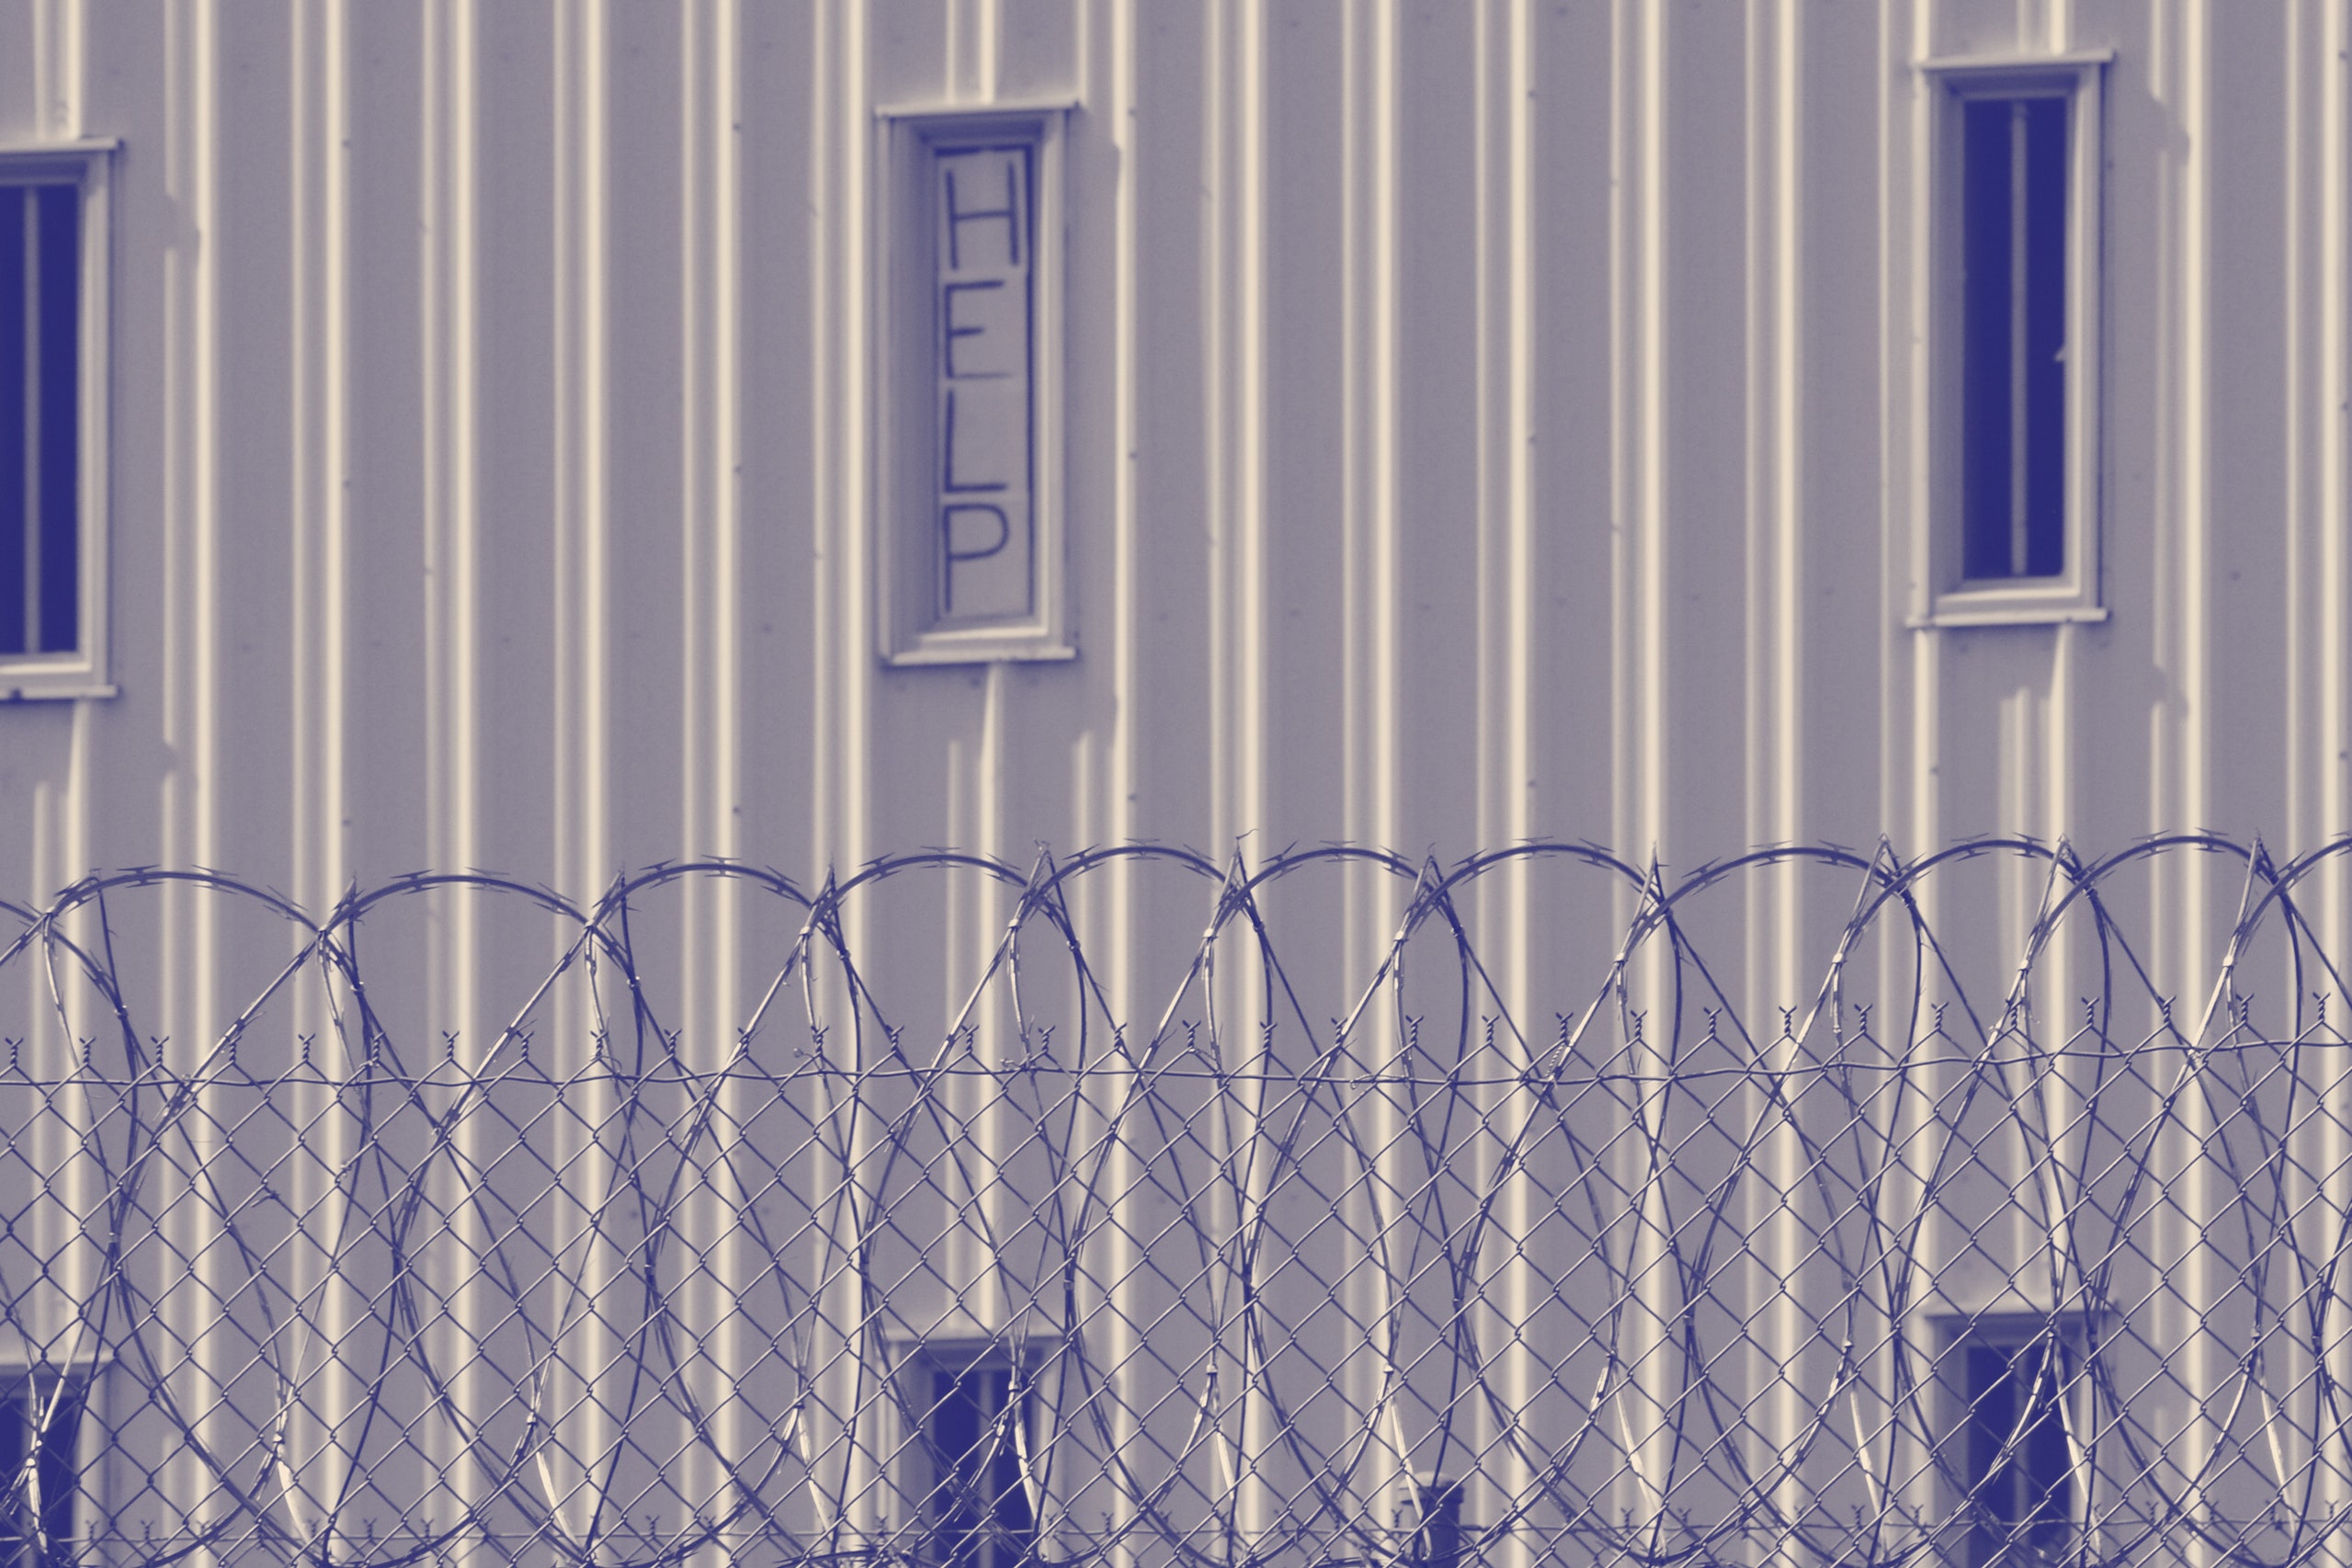 Robert Sember: “Alabama and the Struggle Against Mass Incarceration”